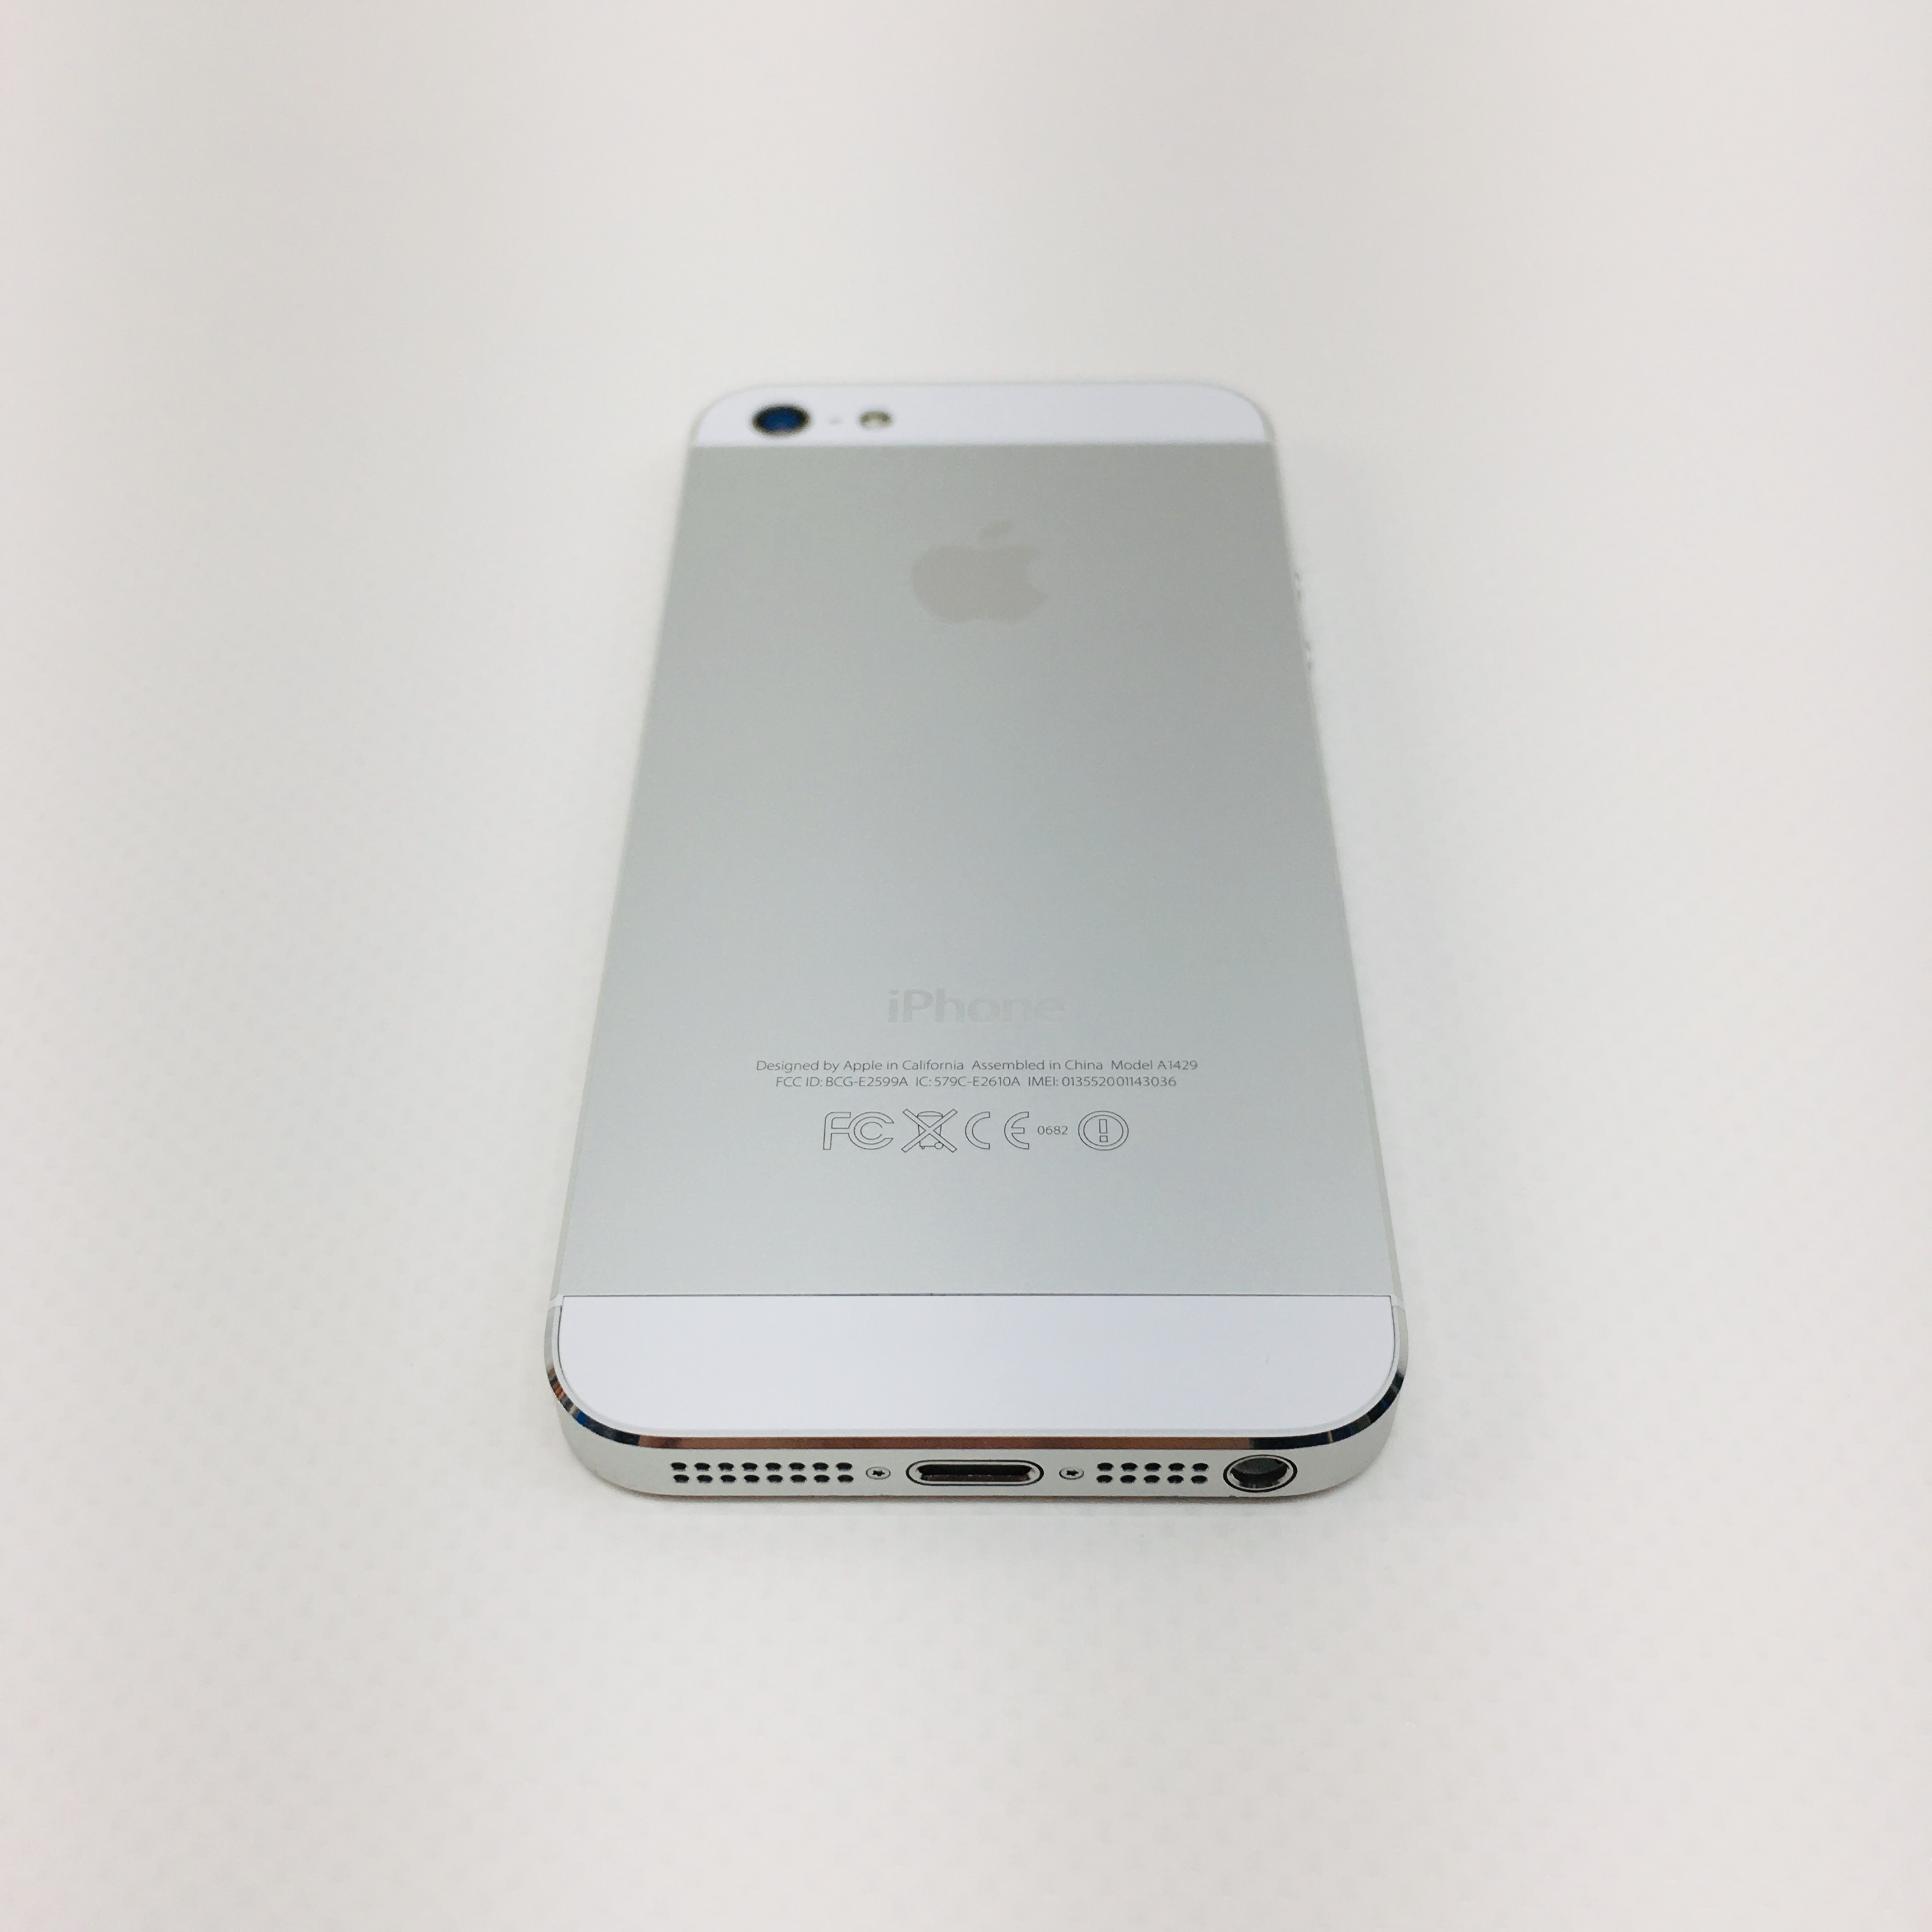 iPhone 5 Silver 16 GB au - スマートフォン本体